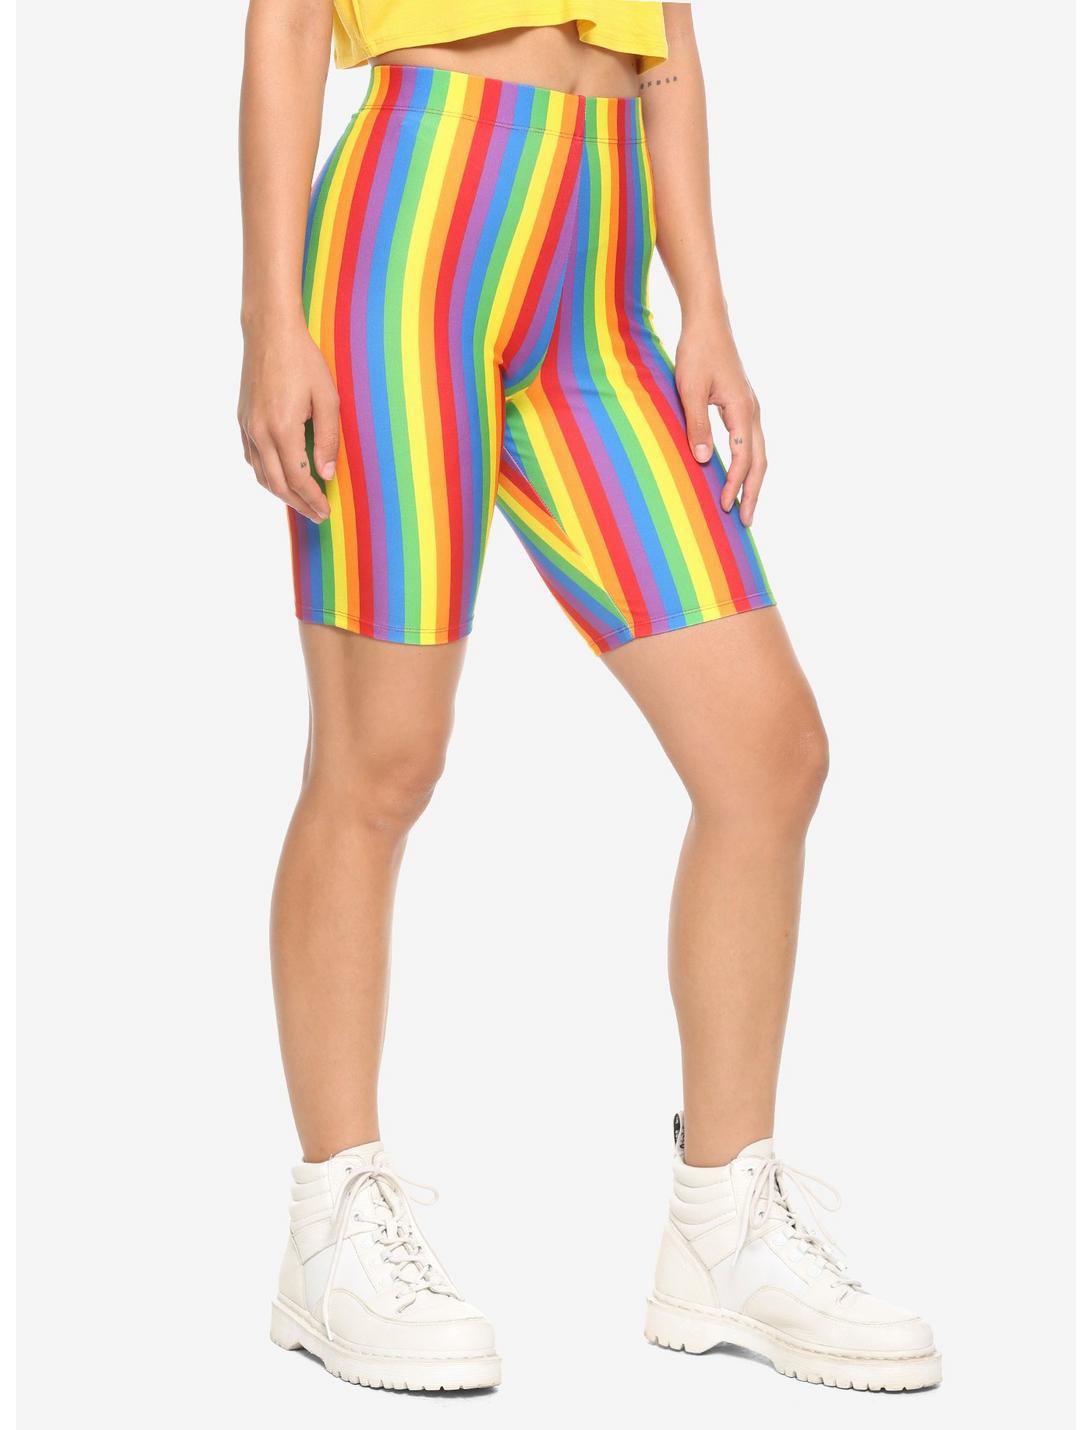 Rainbow Girls Bike Shorts, RAINBOW, hi-res